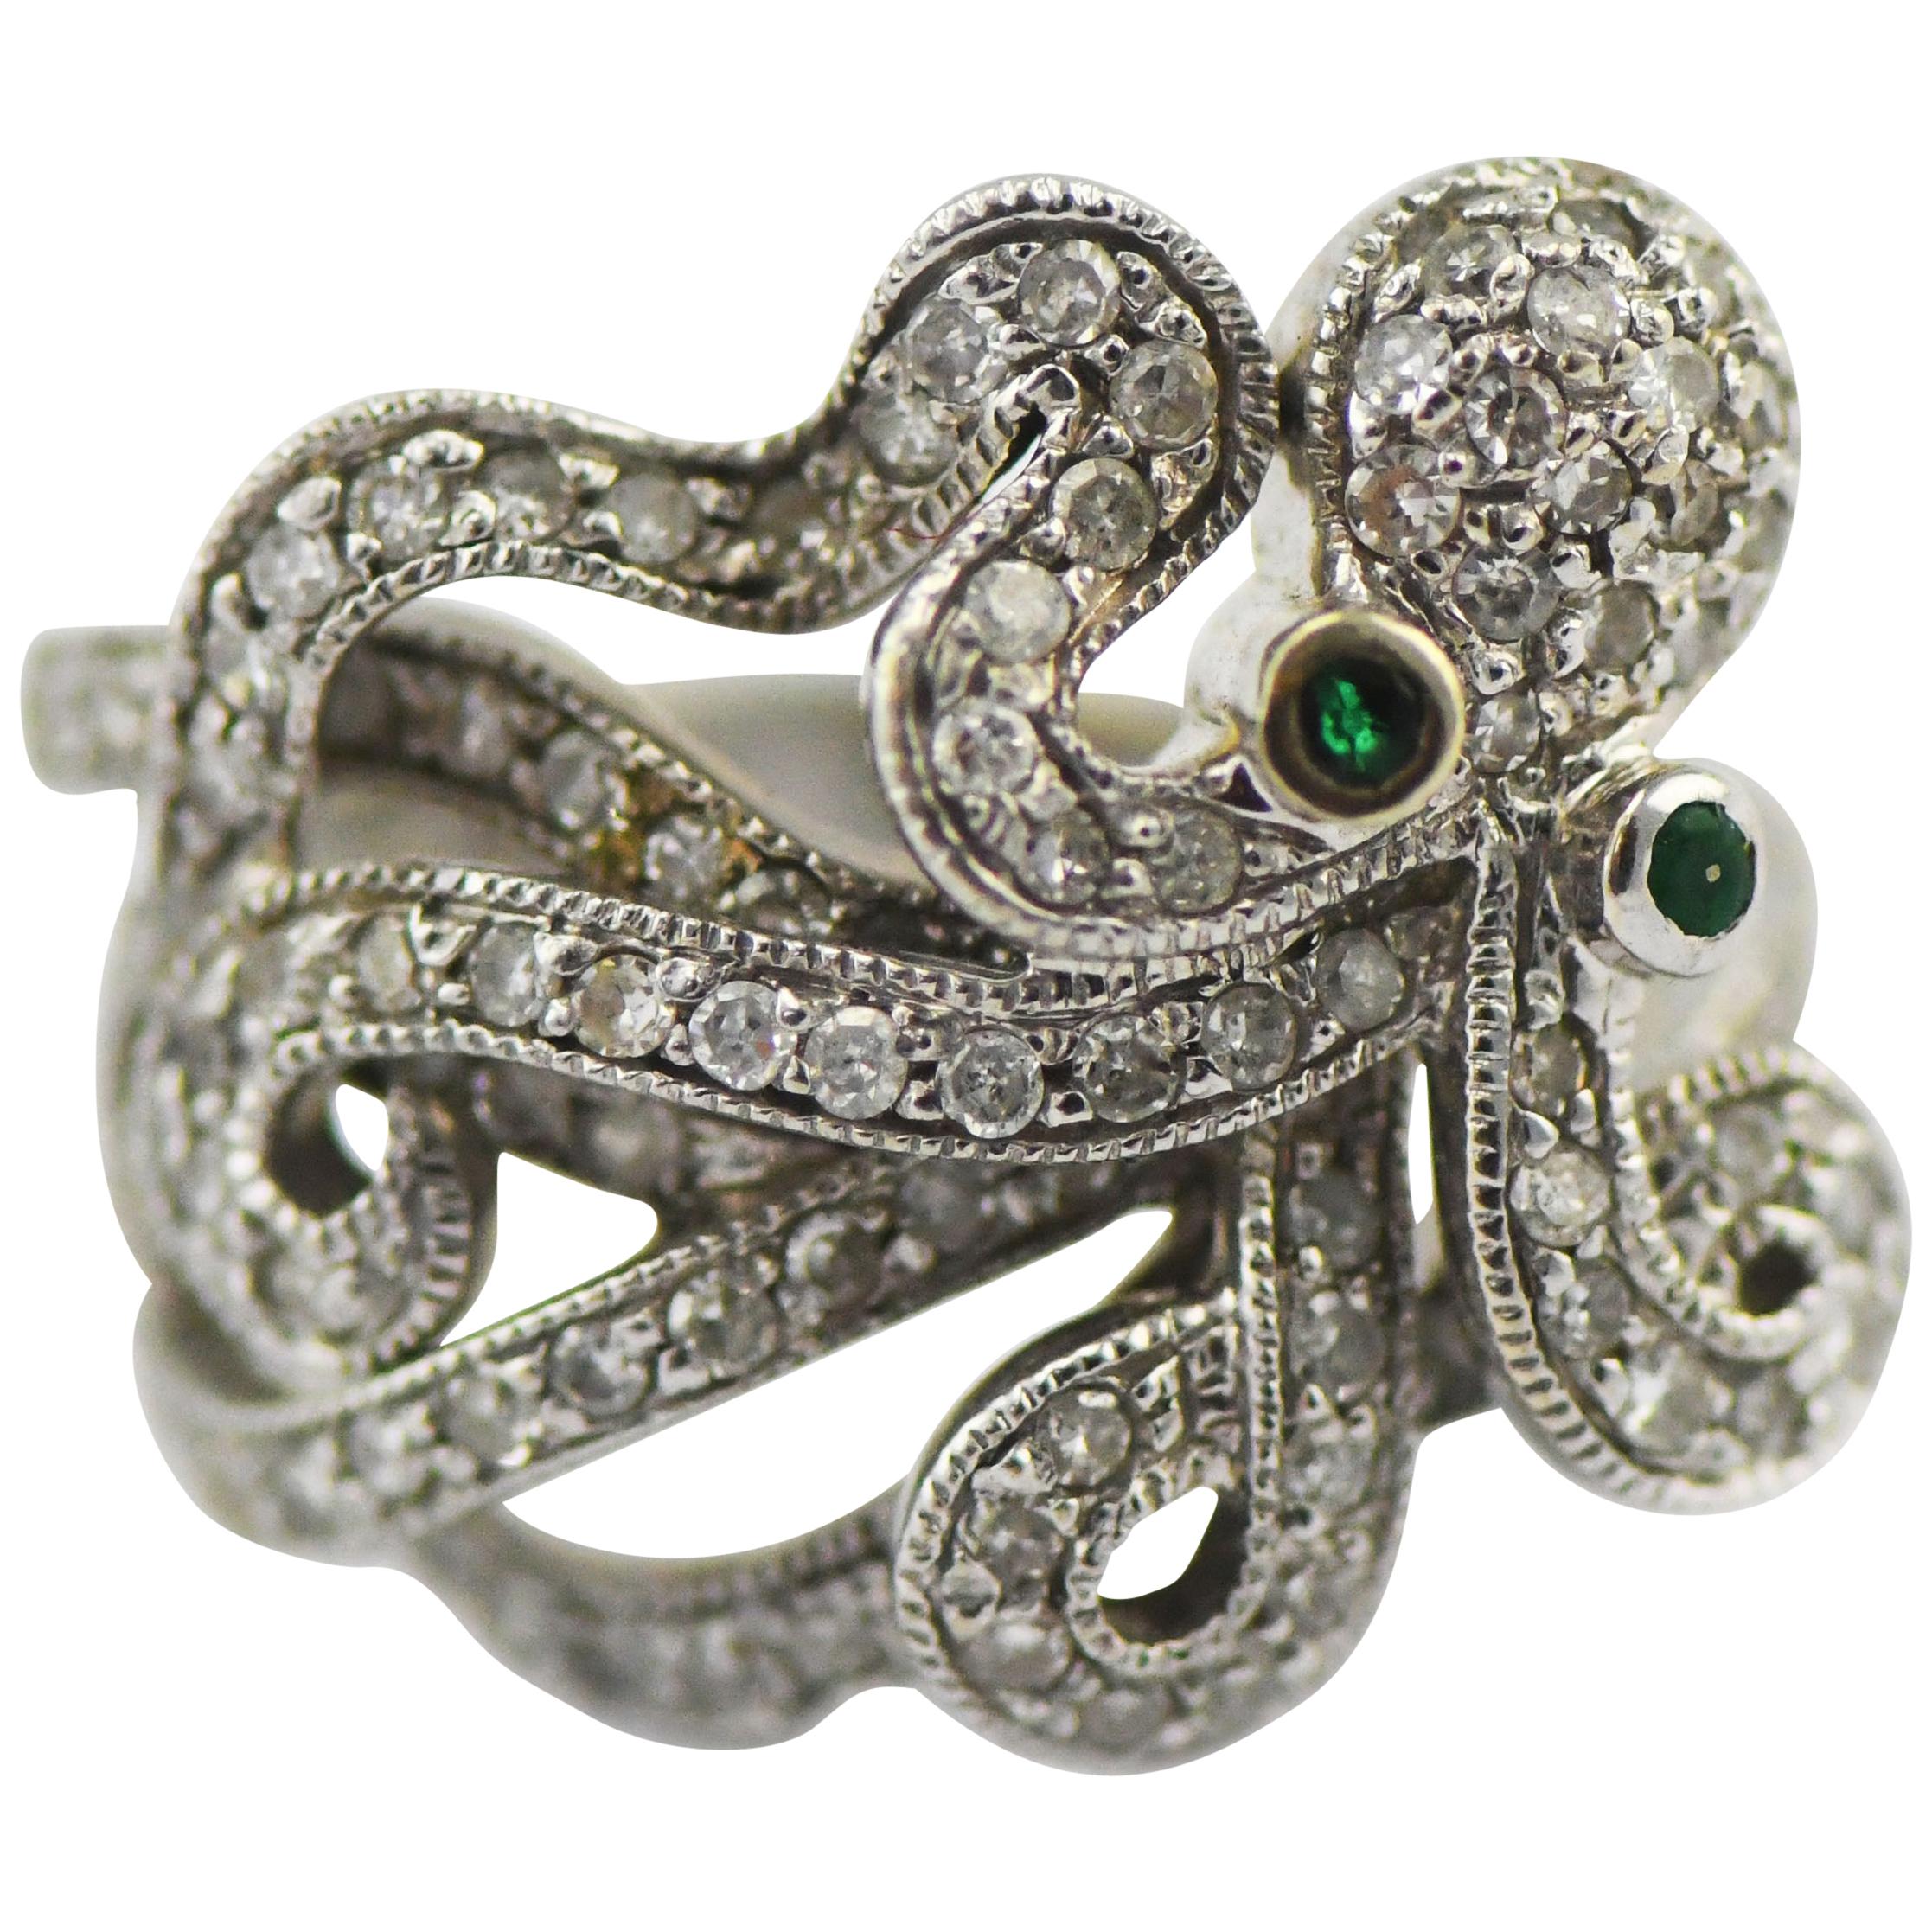 John C. Rinker Octopus Ring 1 Carat Diamonds with Emerald Eyes